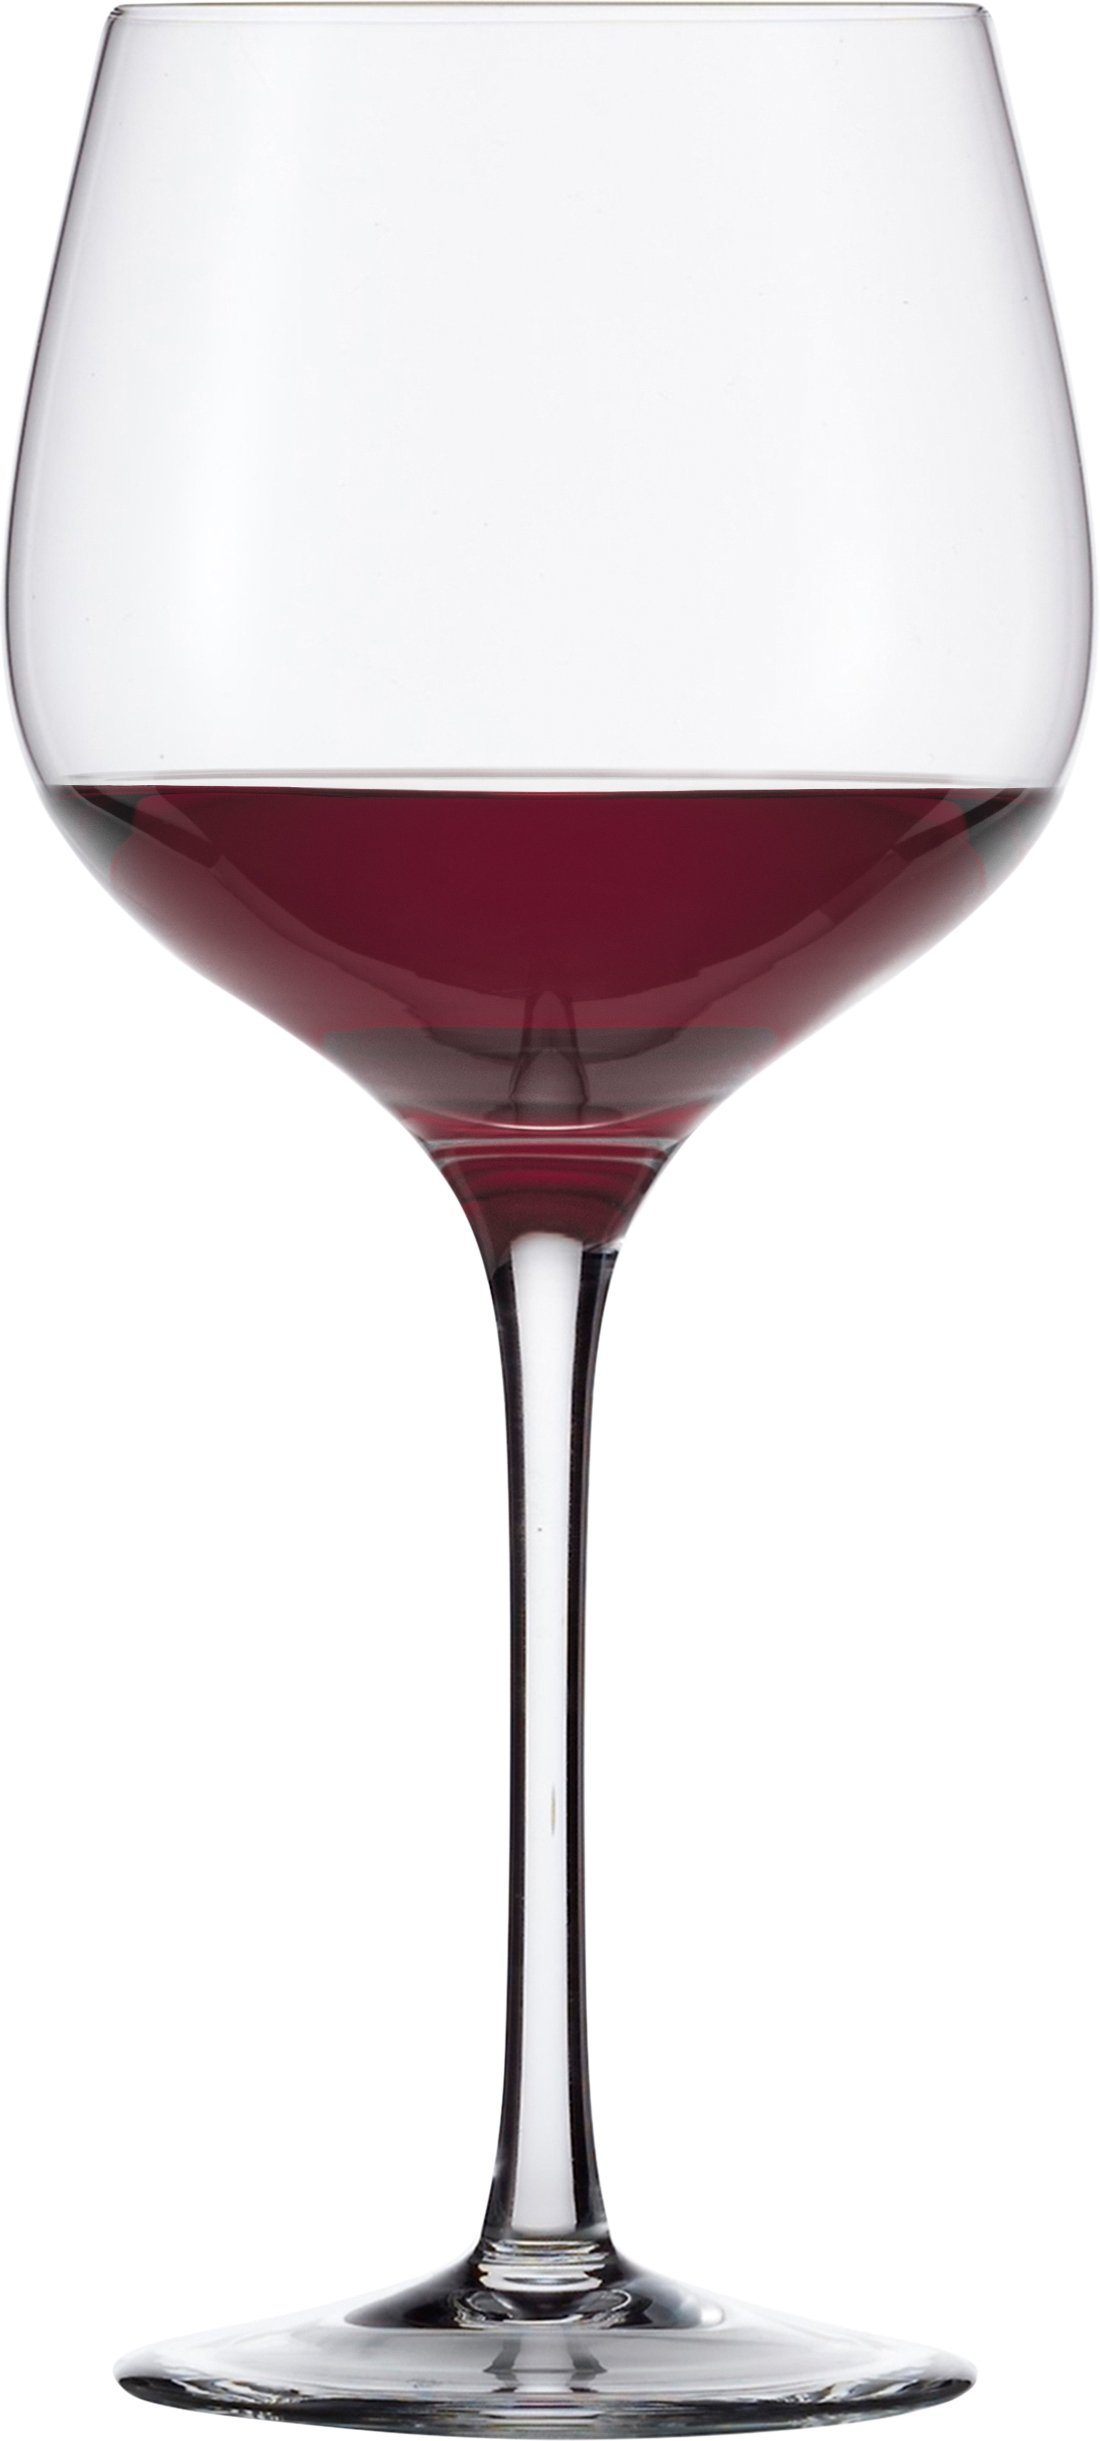 Eisch Rotweinglas Superior SensisPlus, Kristallglas, (Burgunderglas), bleifrei, 680 ml, 4-teilig